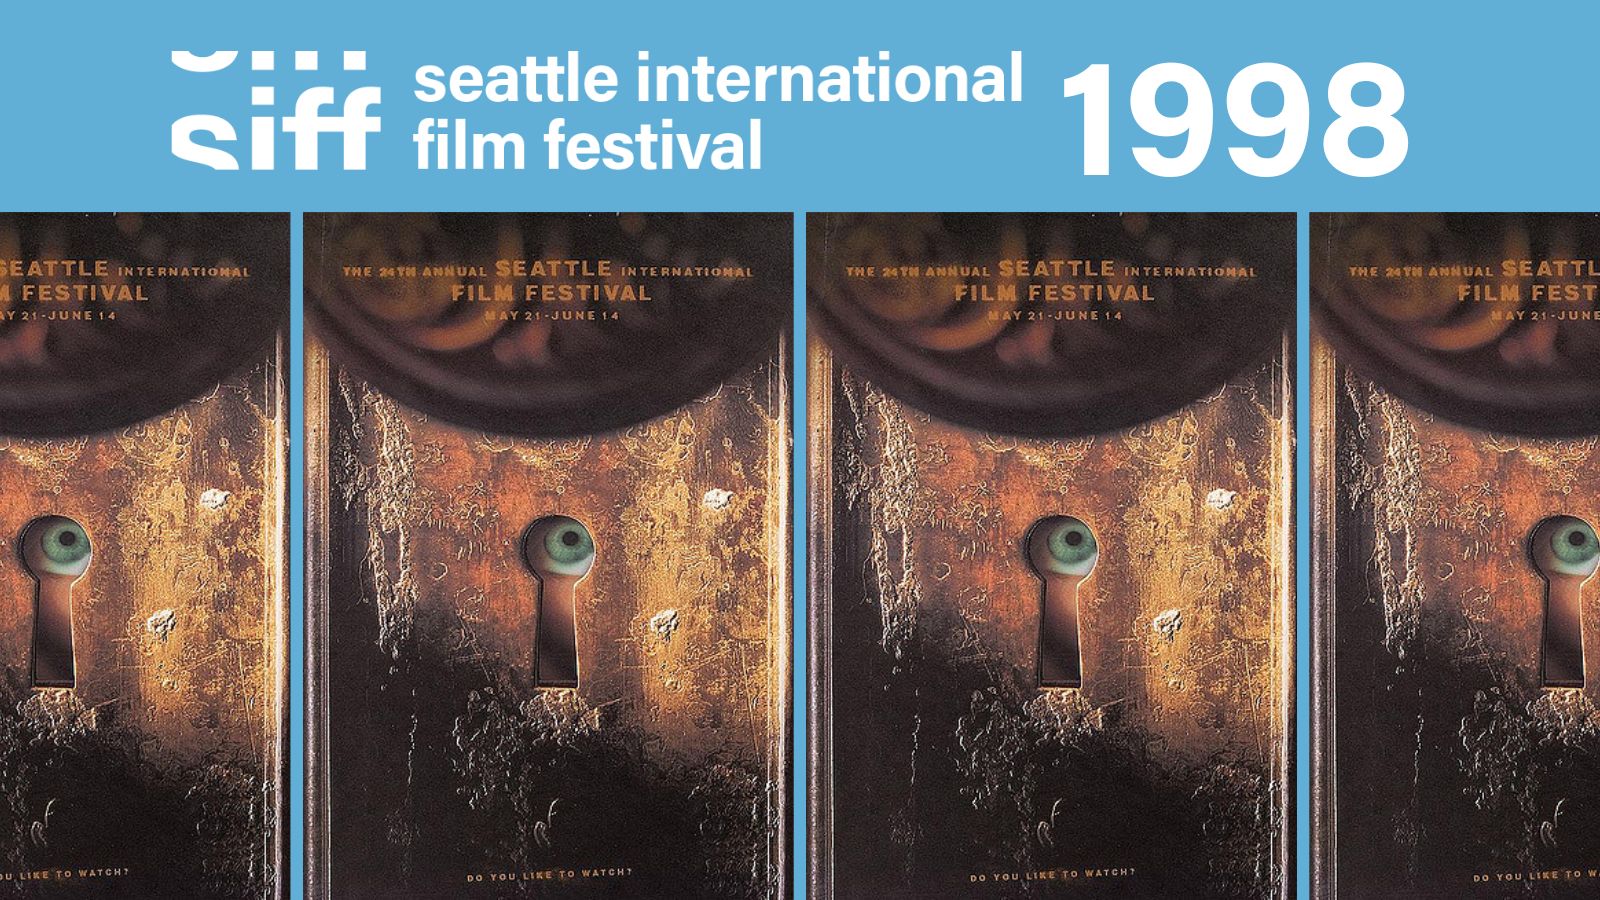 Seattle International Film Festival 1998